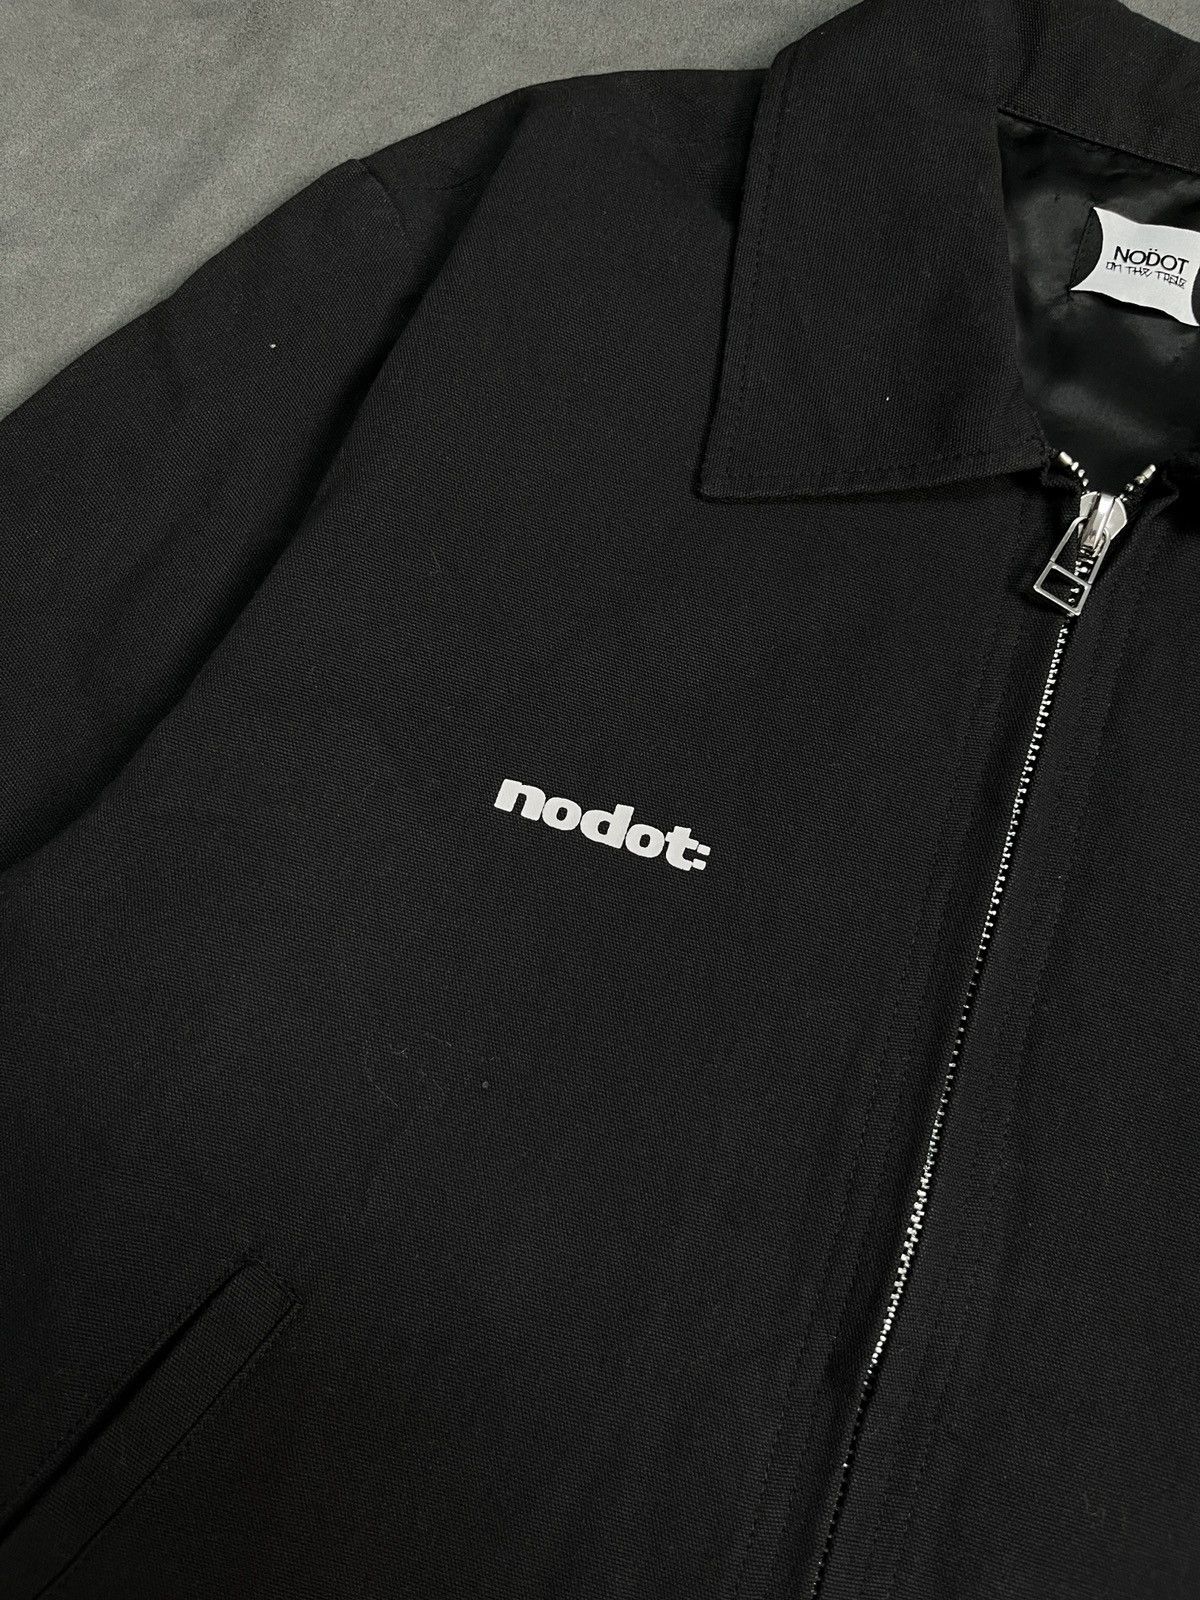 Hype - Nodot Y2k Two Way Zipper Black Workwear Jacket Medium - 4